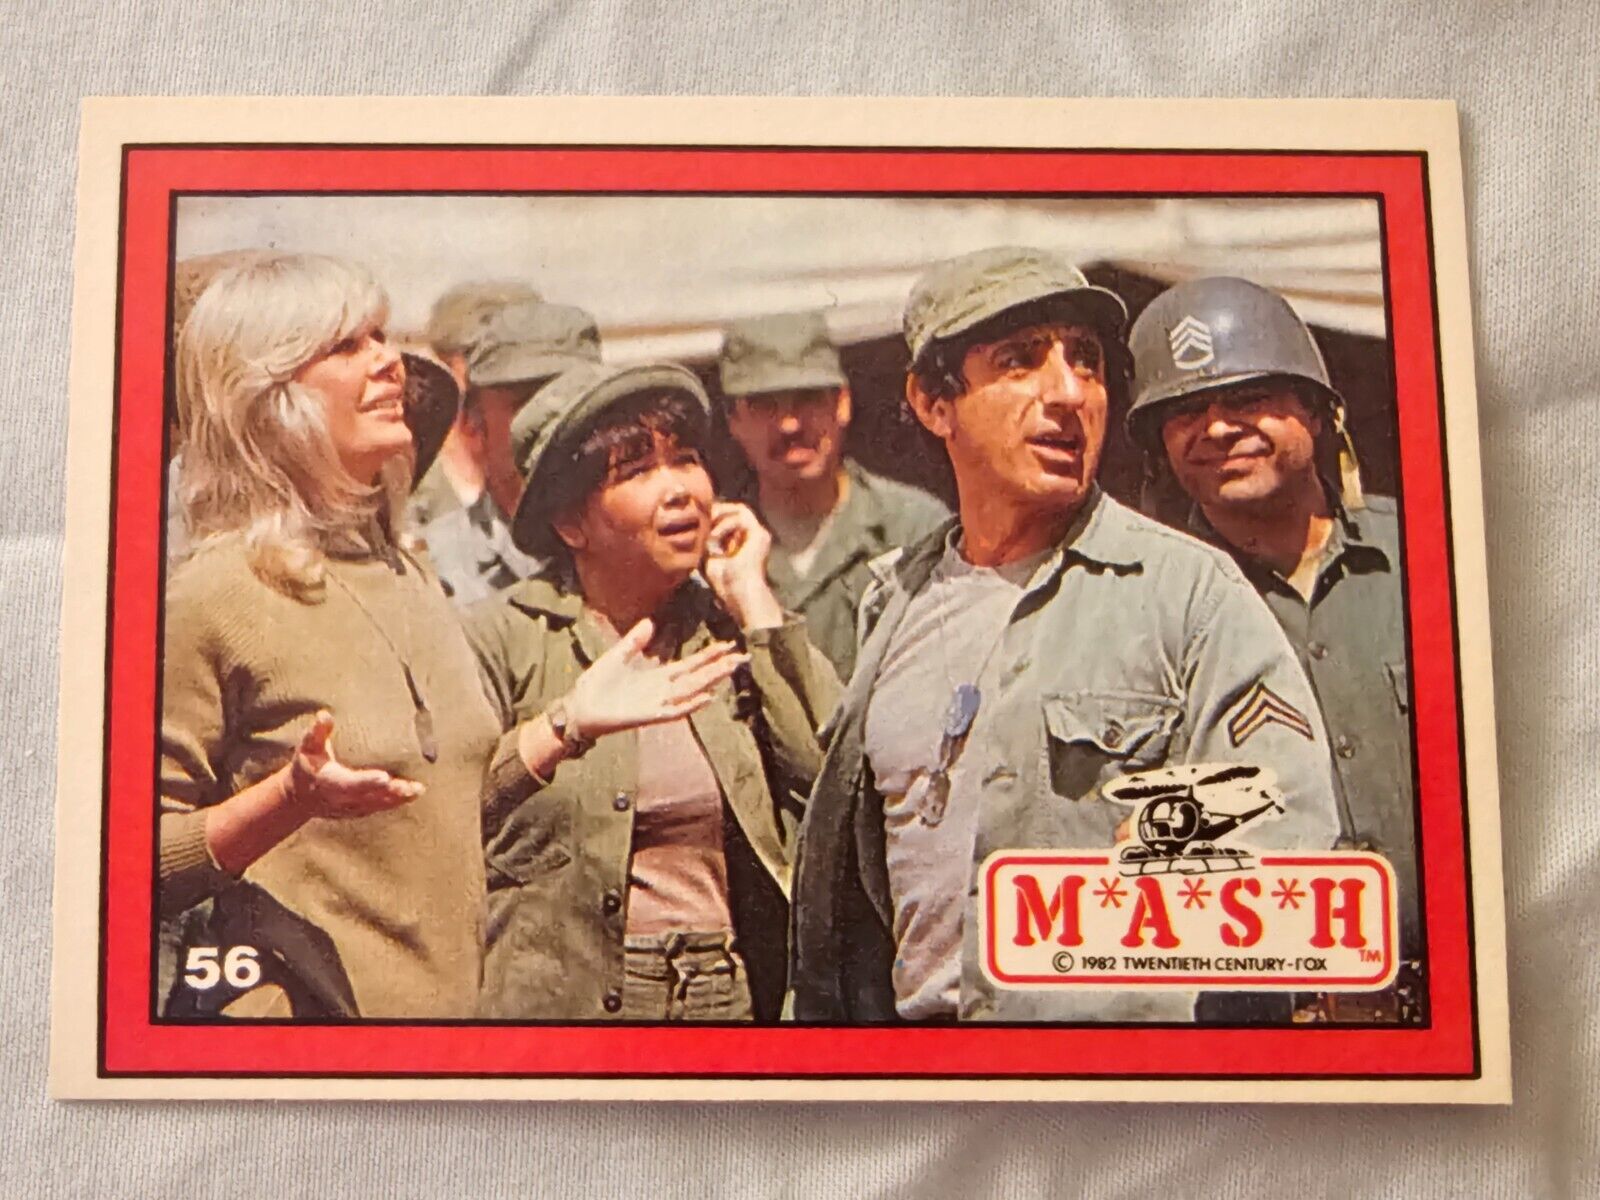 1982 Donruss MASH Trading Card #56